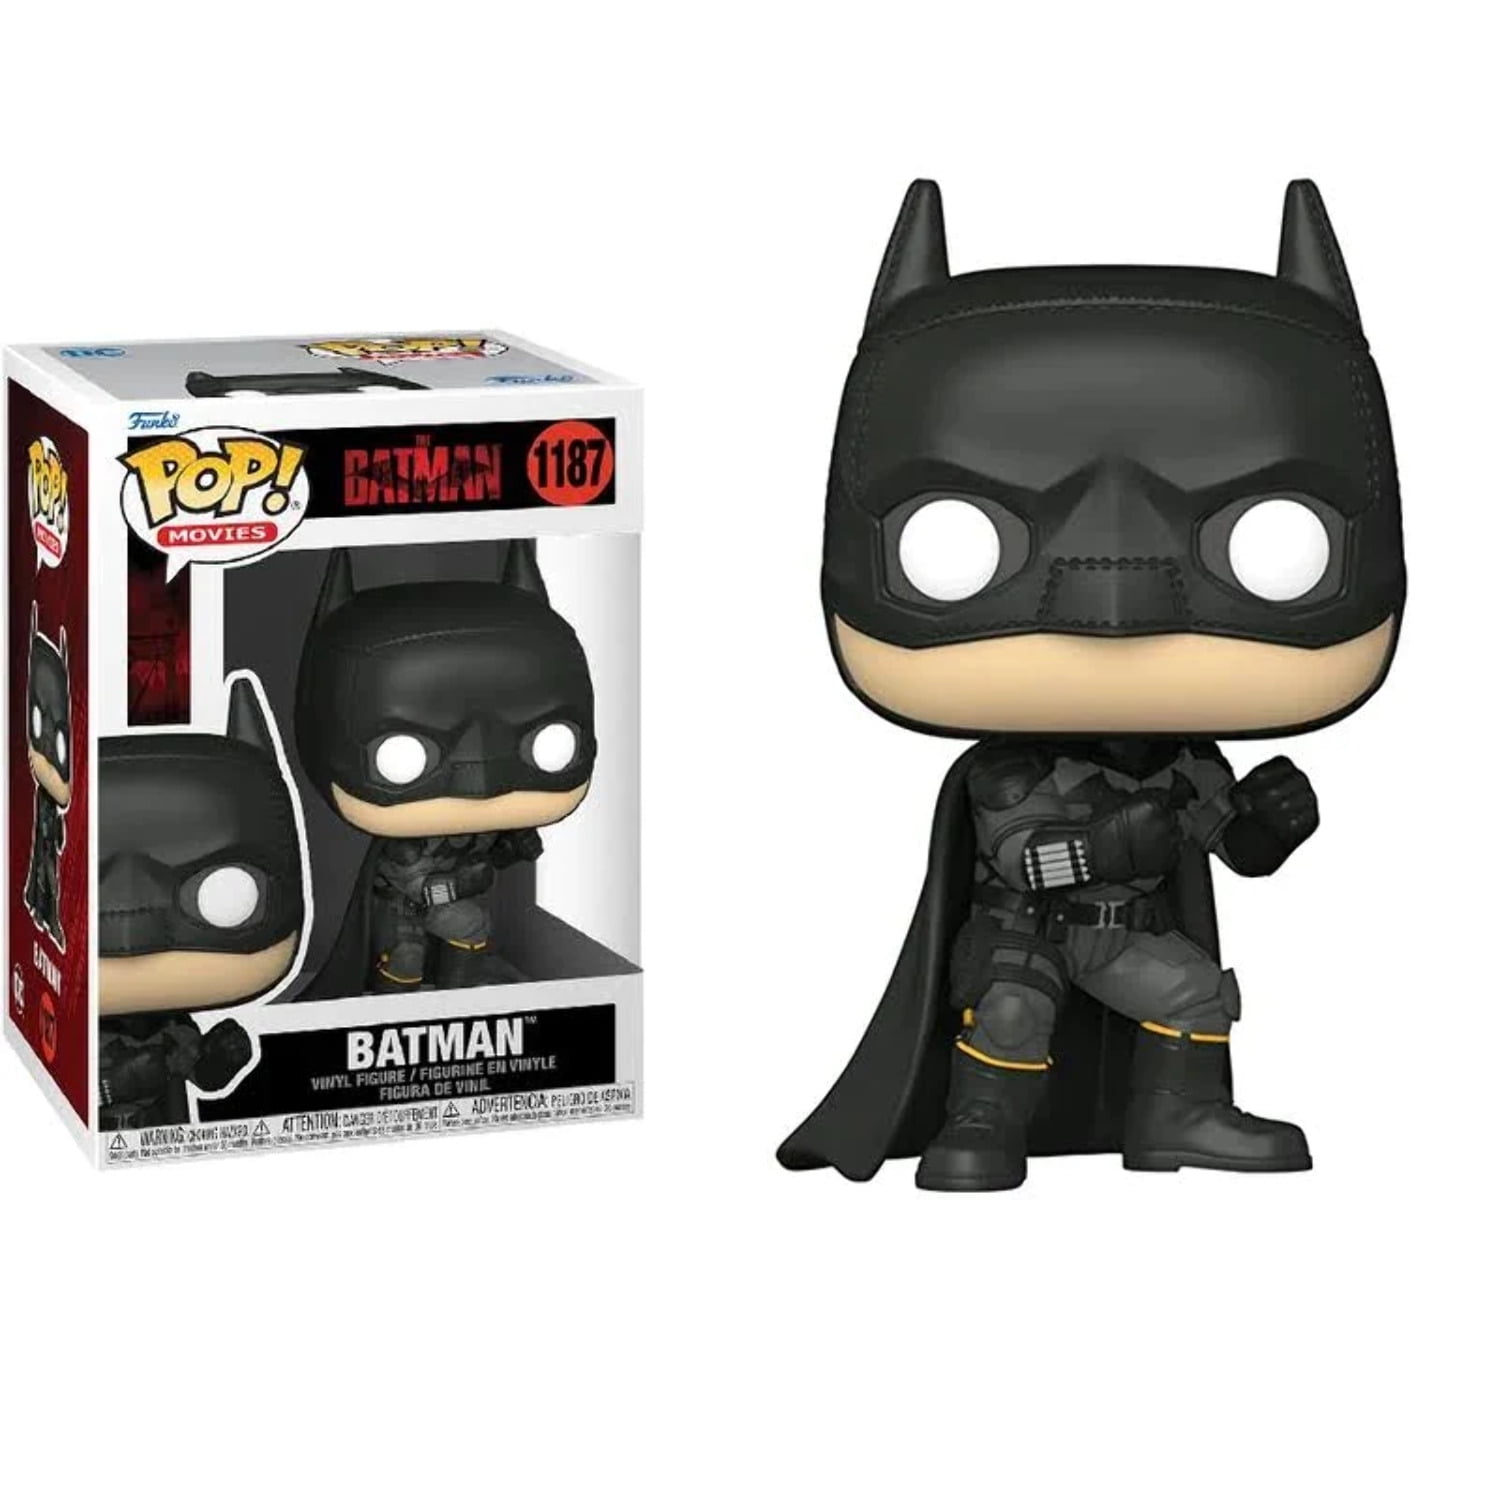 Buy Pop! Batman at Funko.